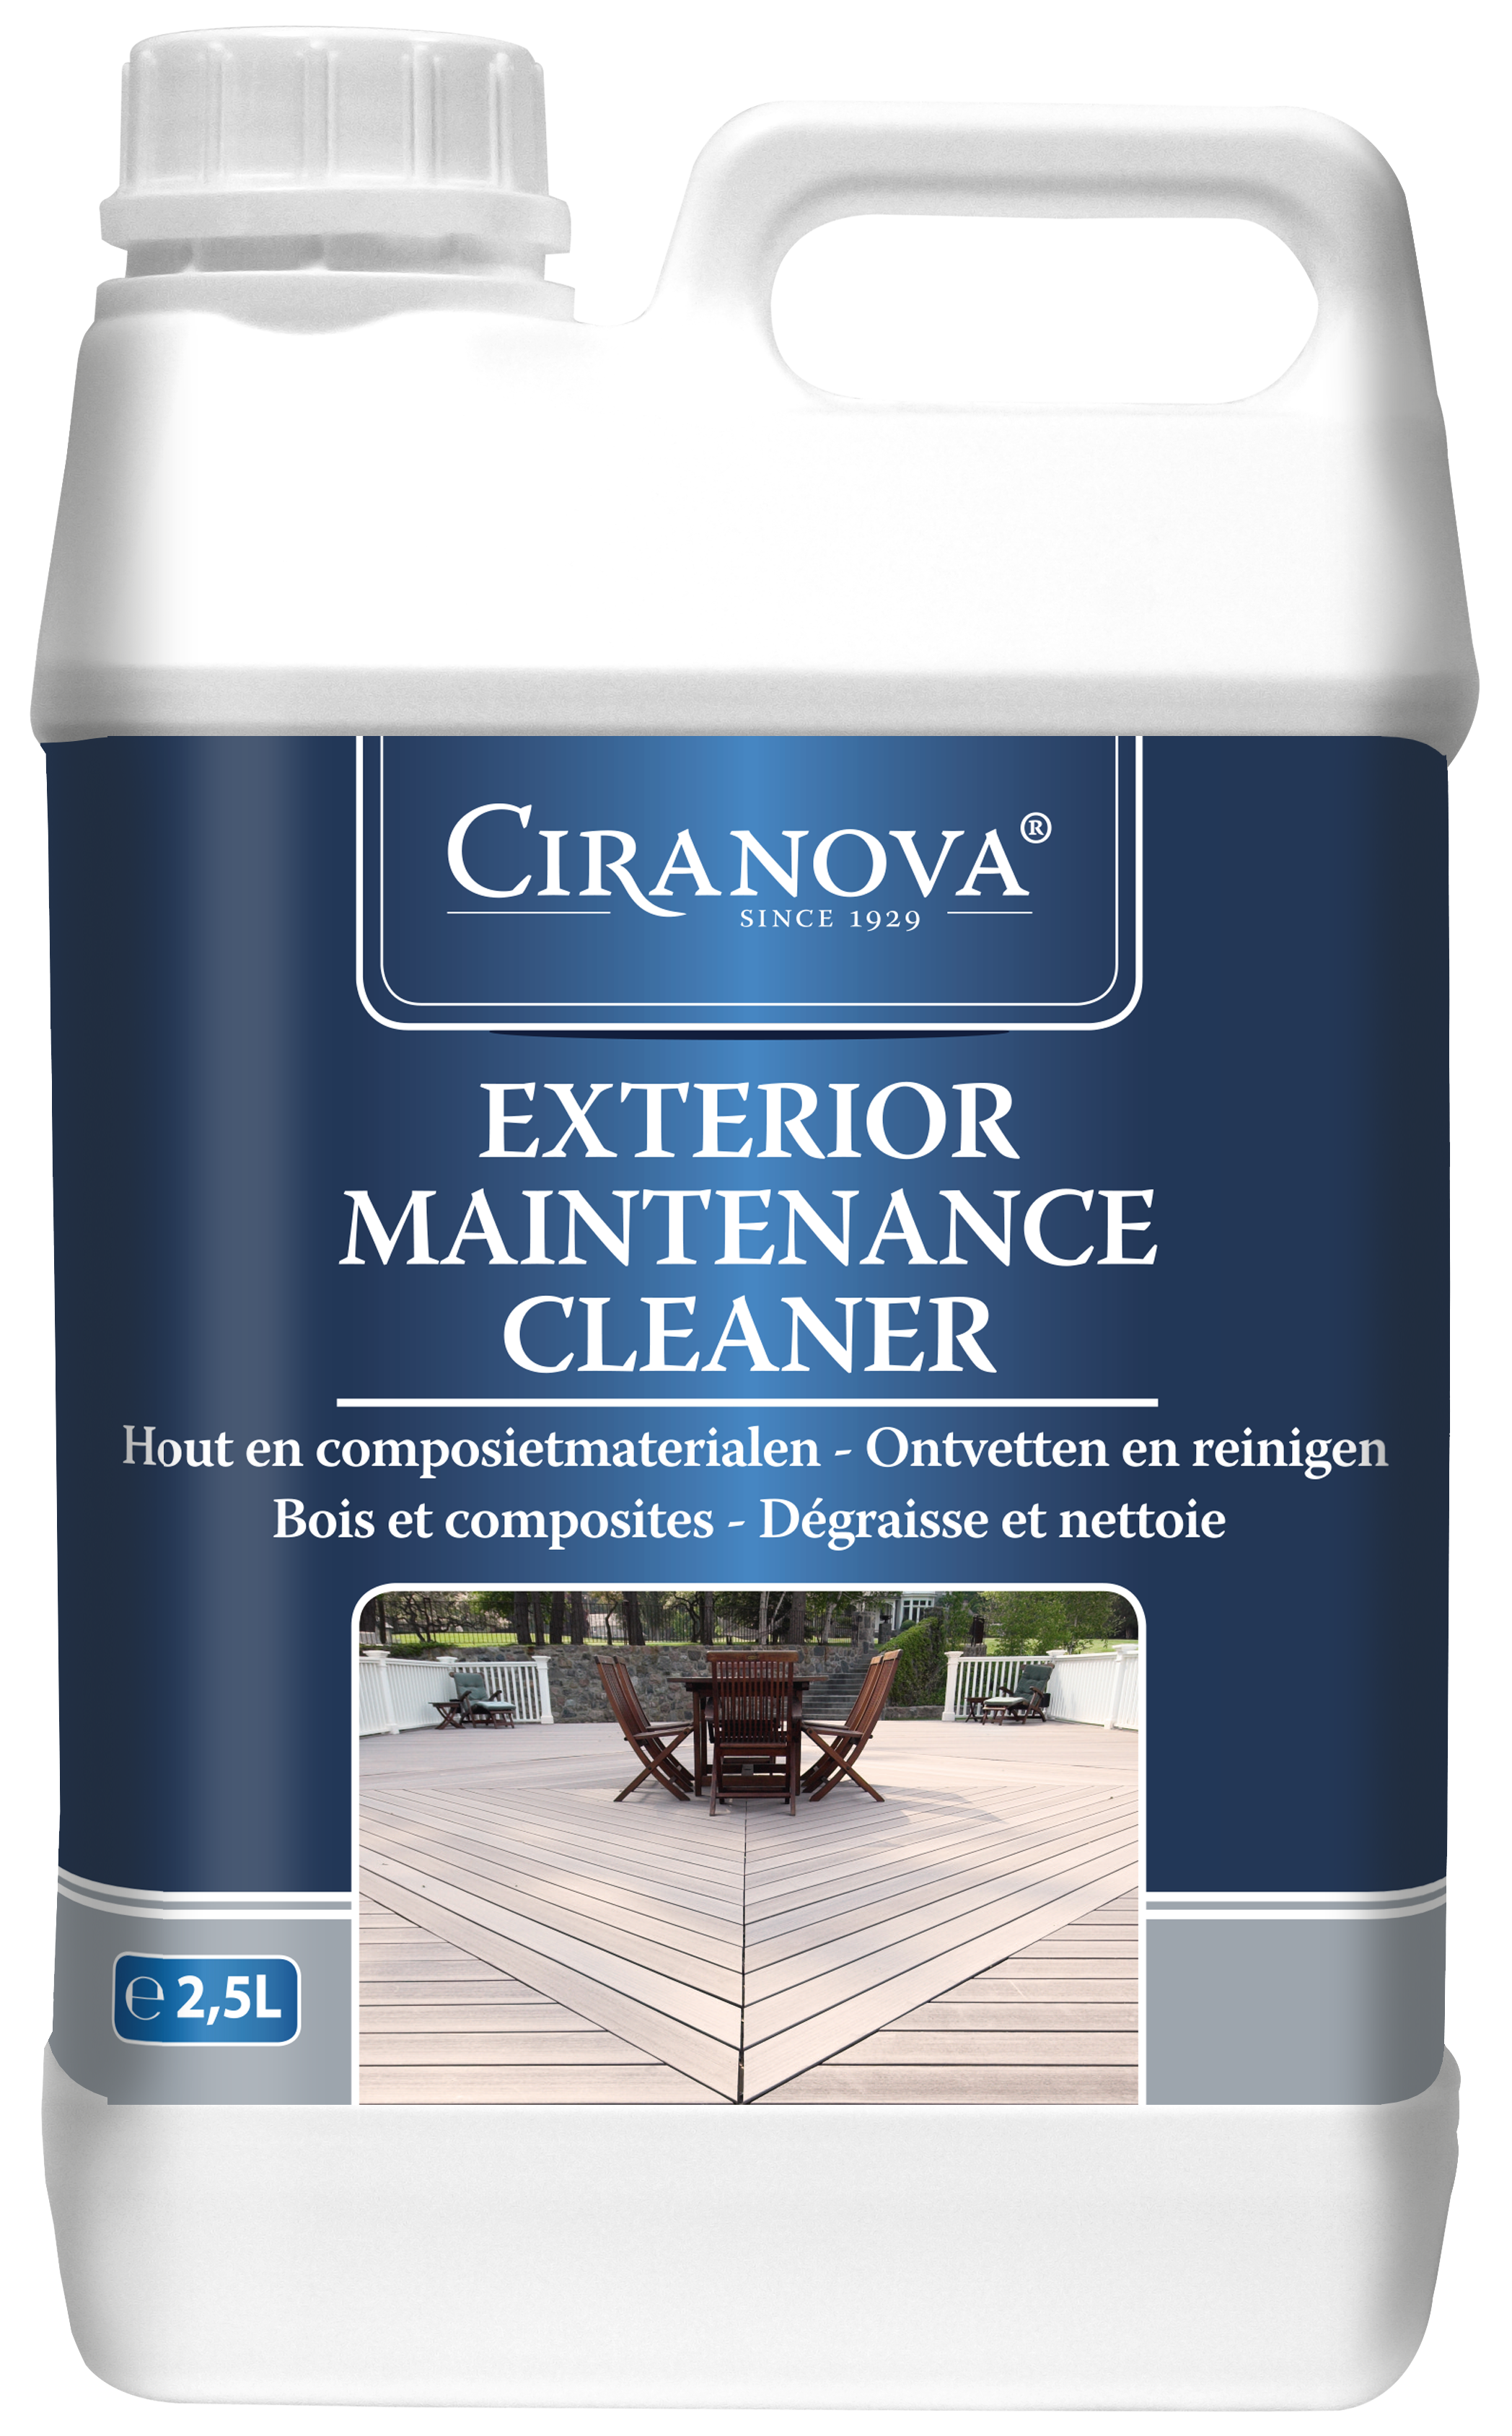 Exterior maintenance cleaner 2,5l